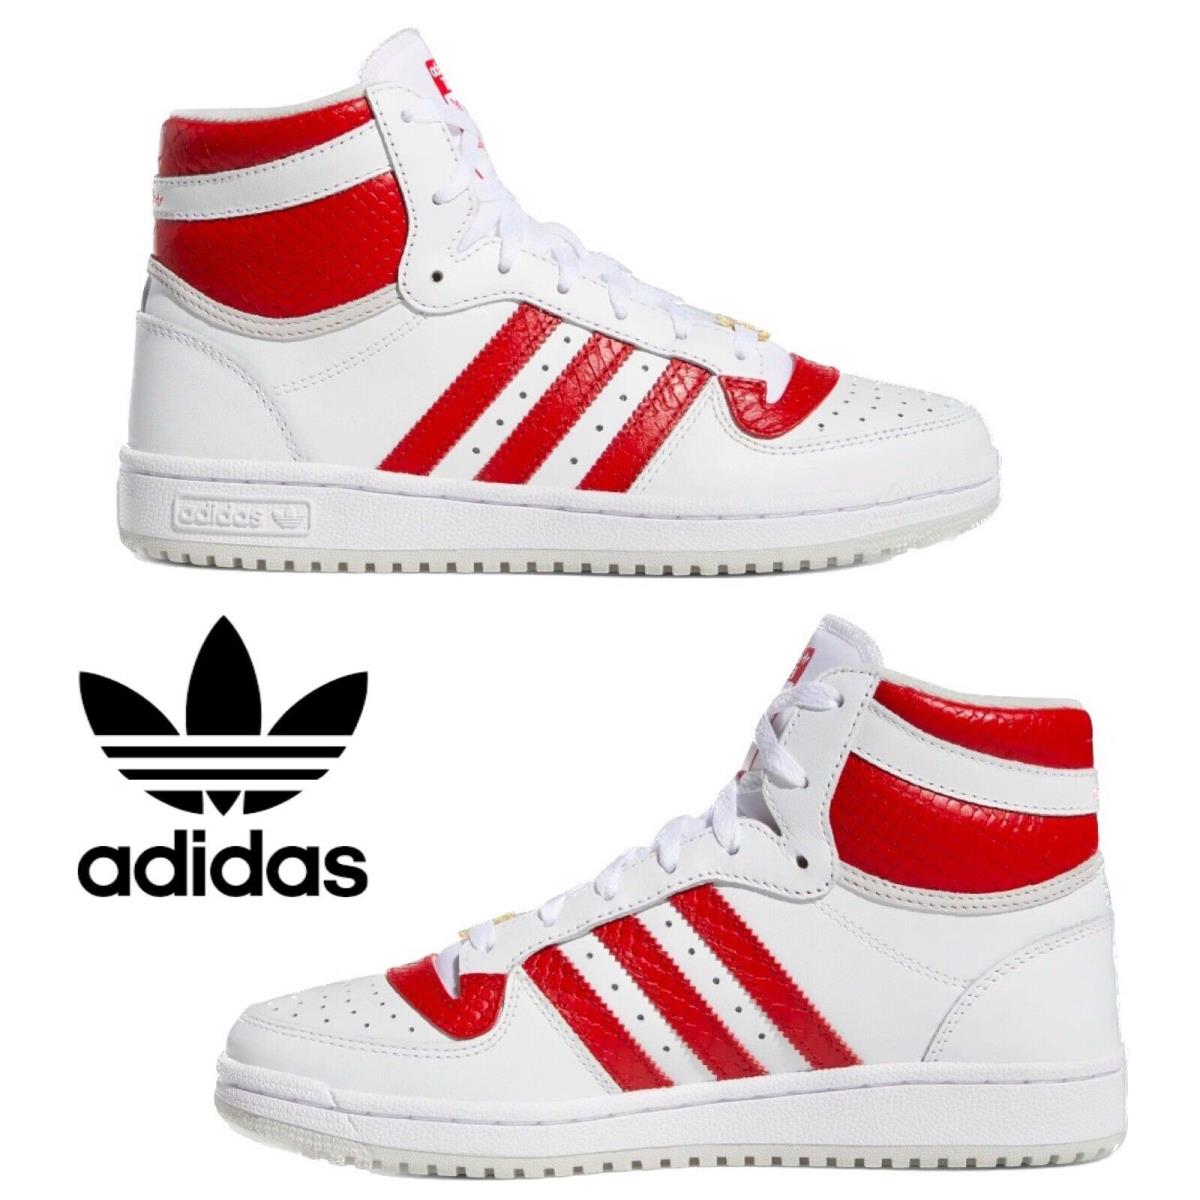 Adidas Originals Top Ten RB Women`s Sneakers Comfort Casual Shoes White Red